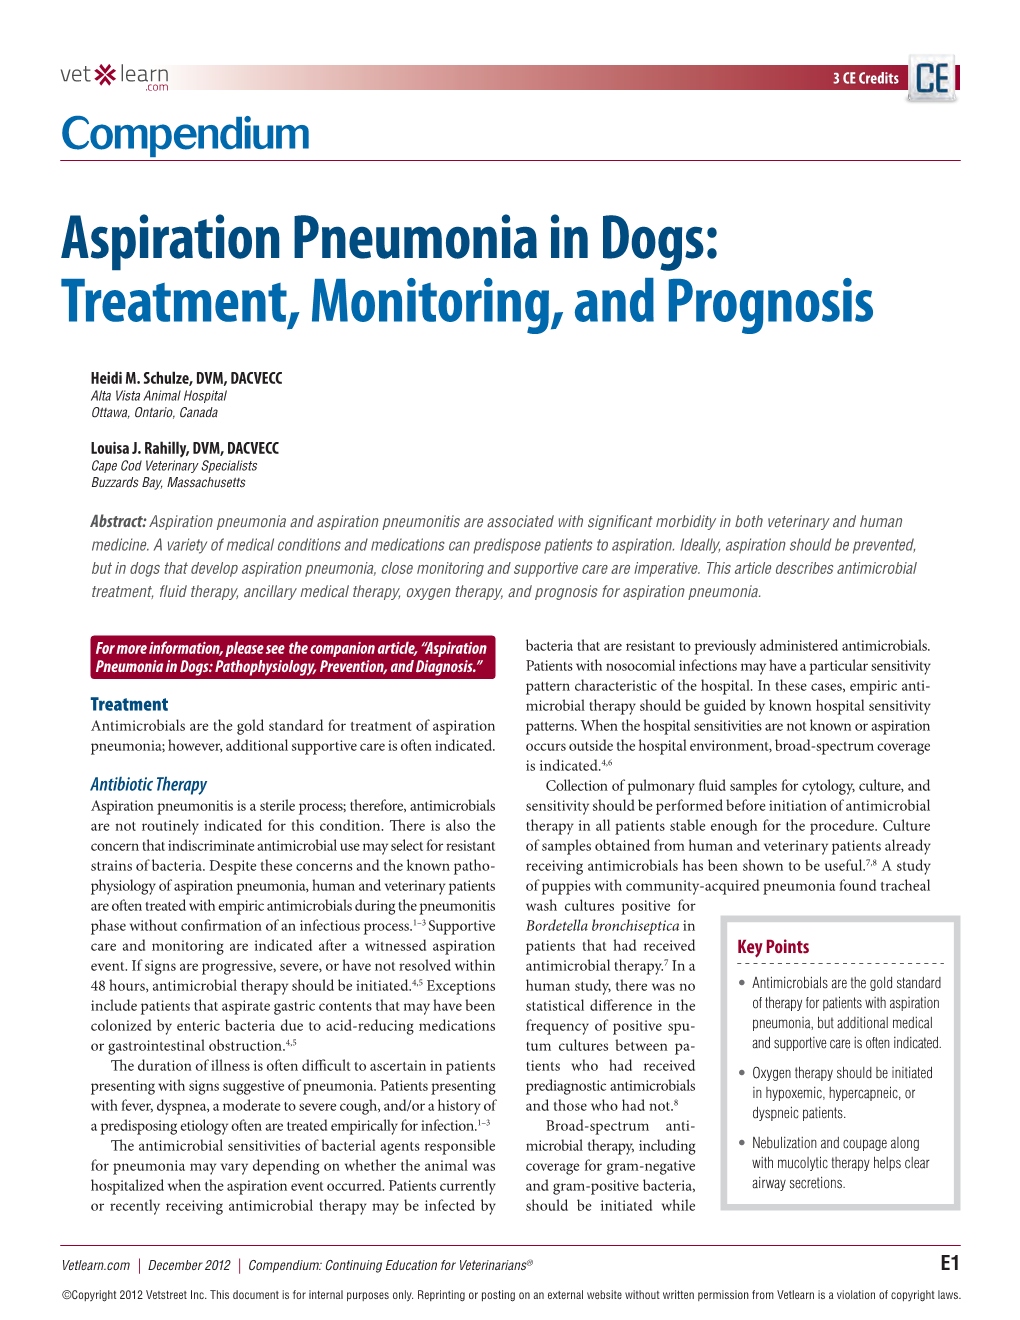 Aspiration Pneumonia in Dogs: Treatment, Monitoring, and Prognosis